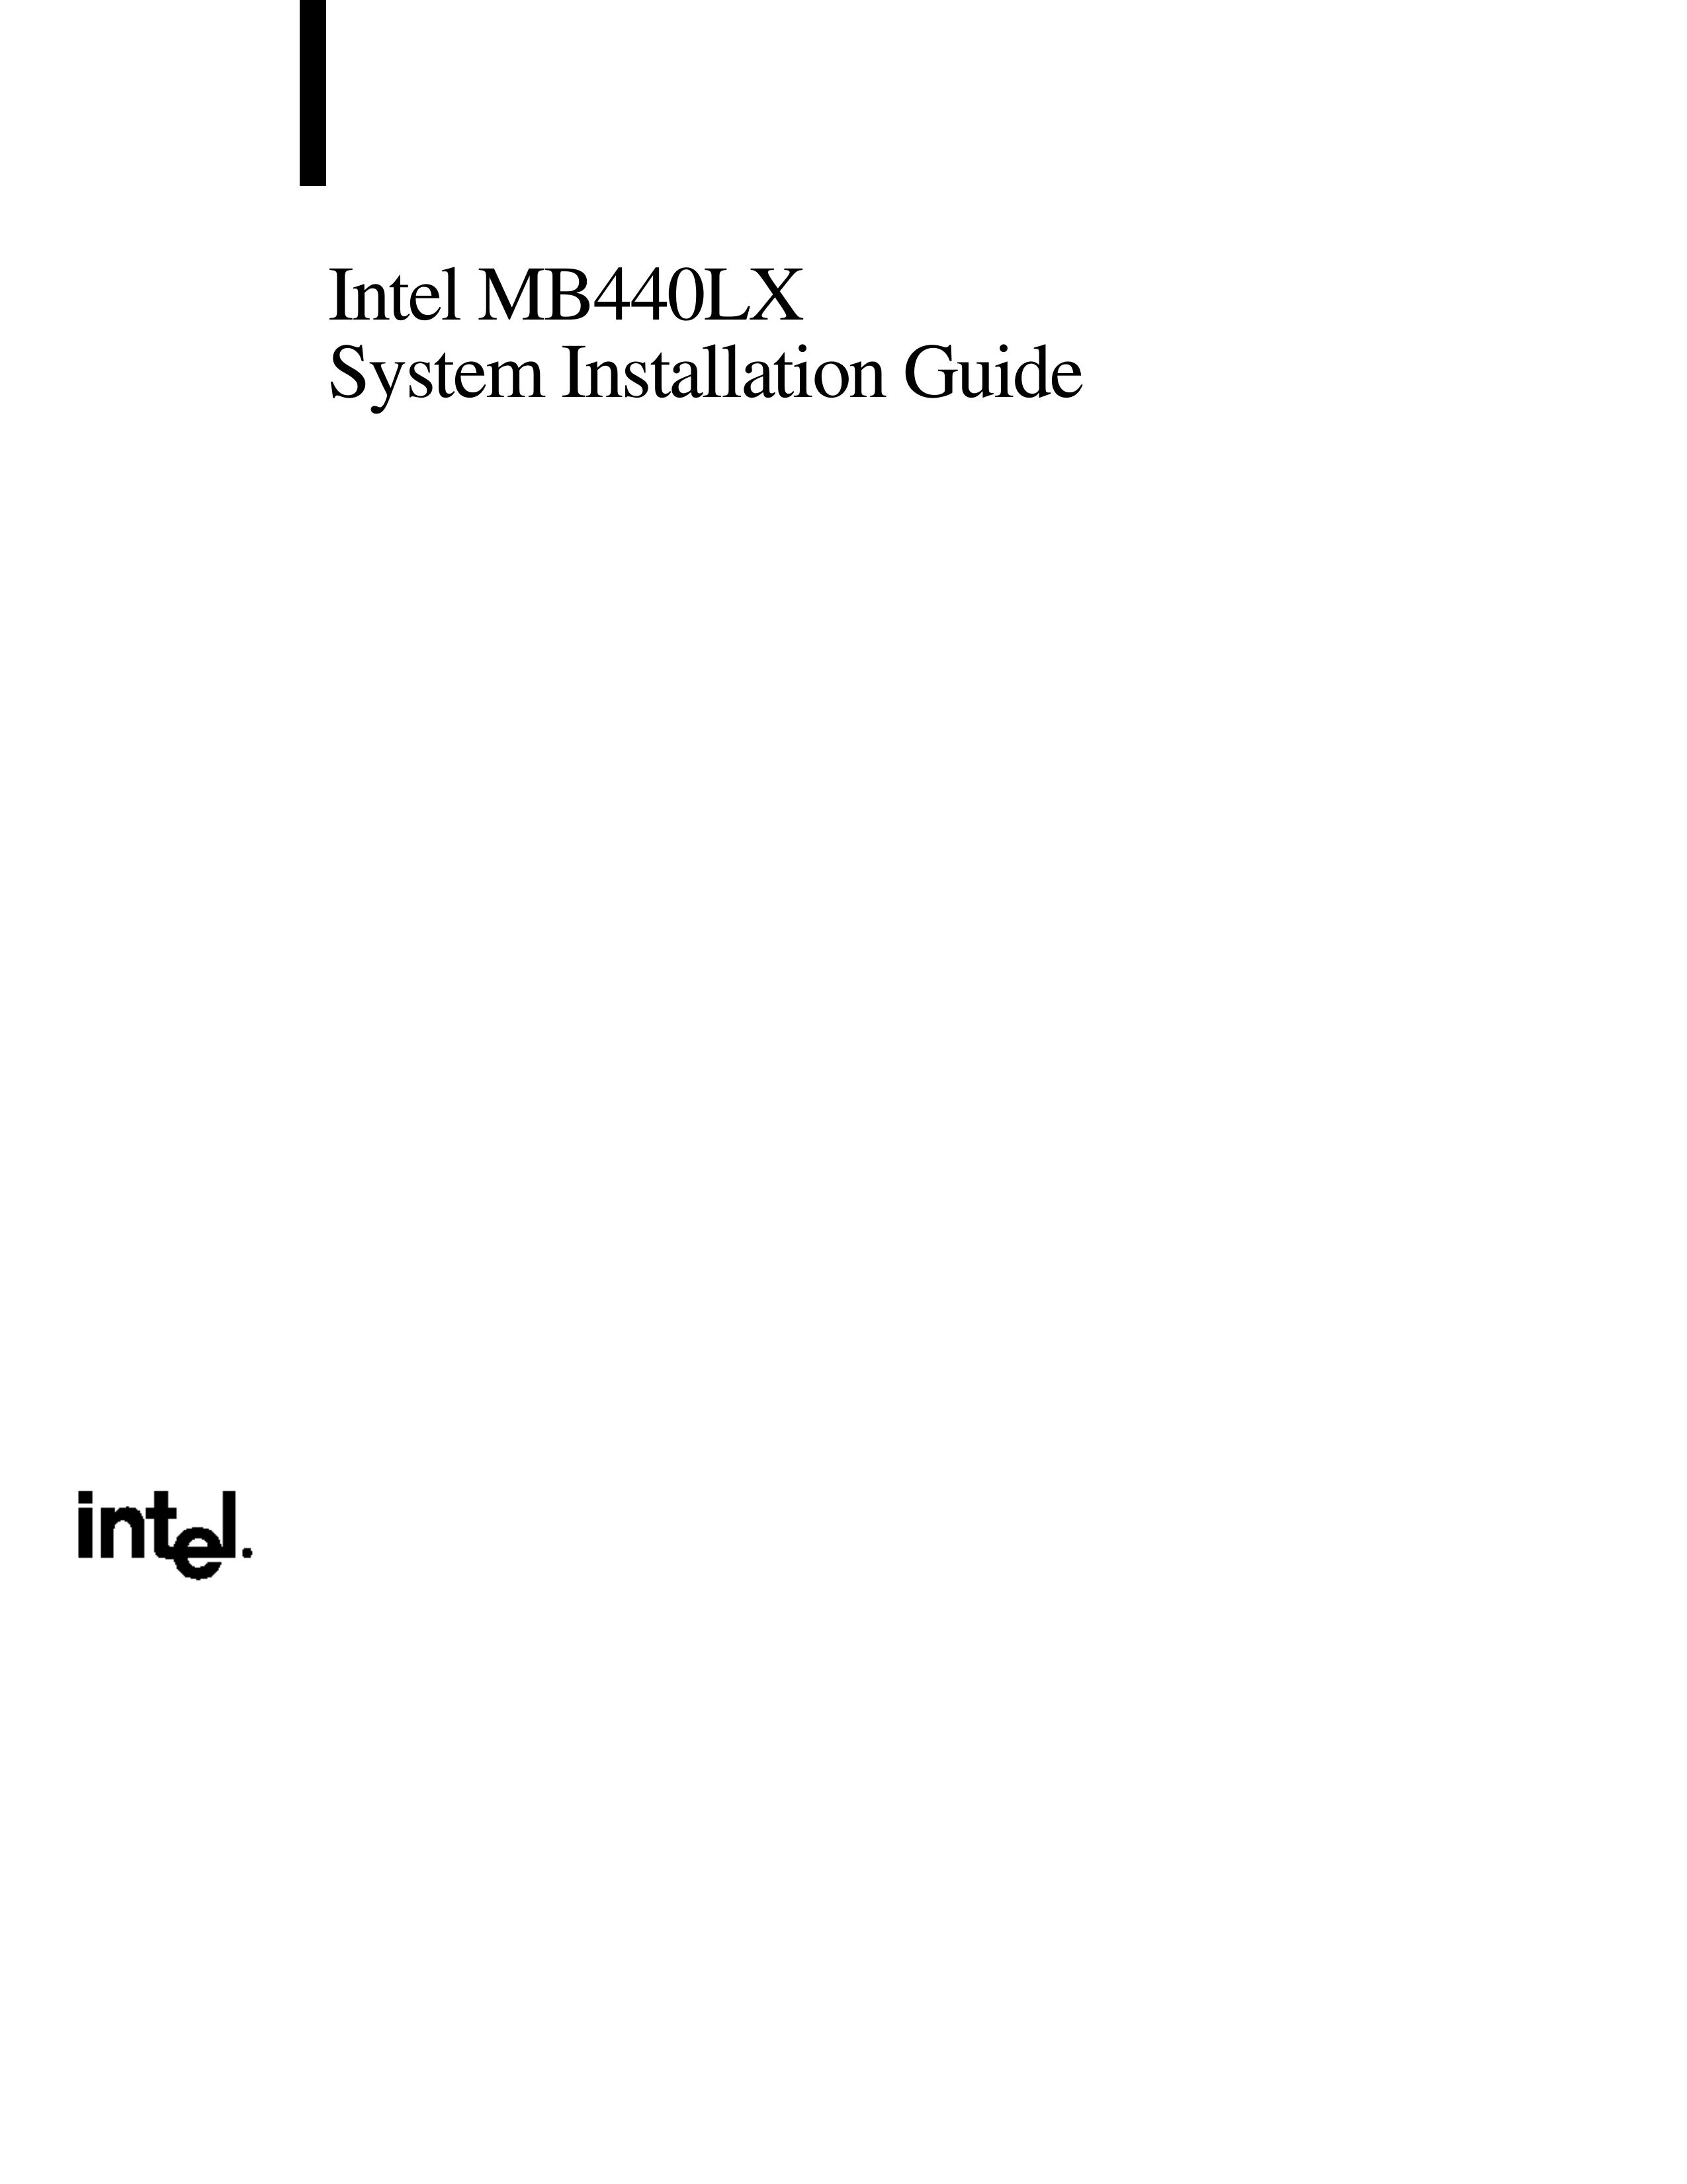 Intel MB440LX Life Jacket User Manual